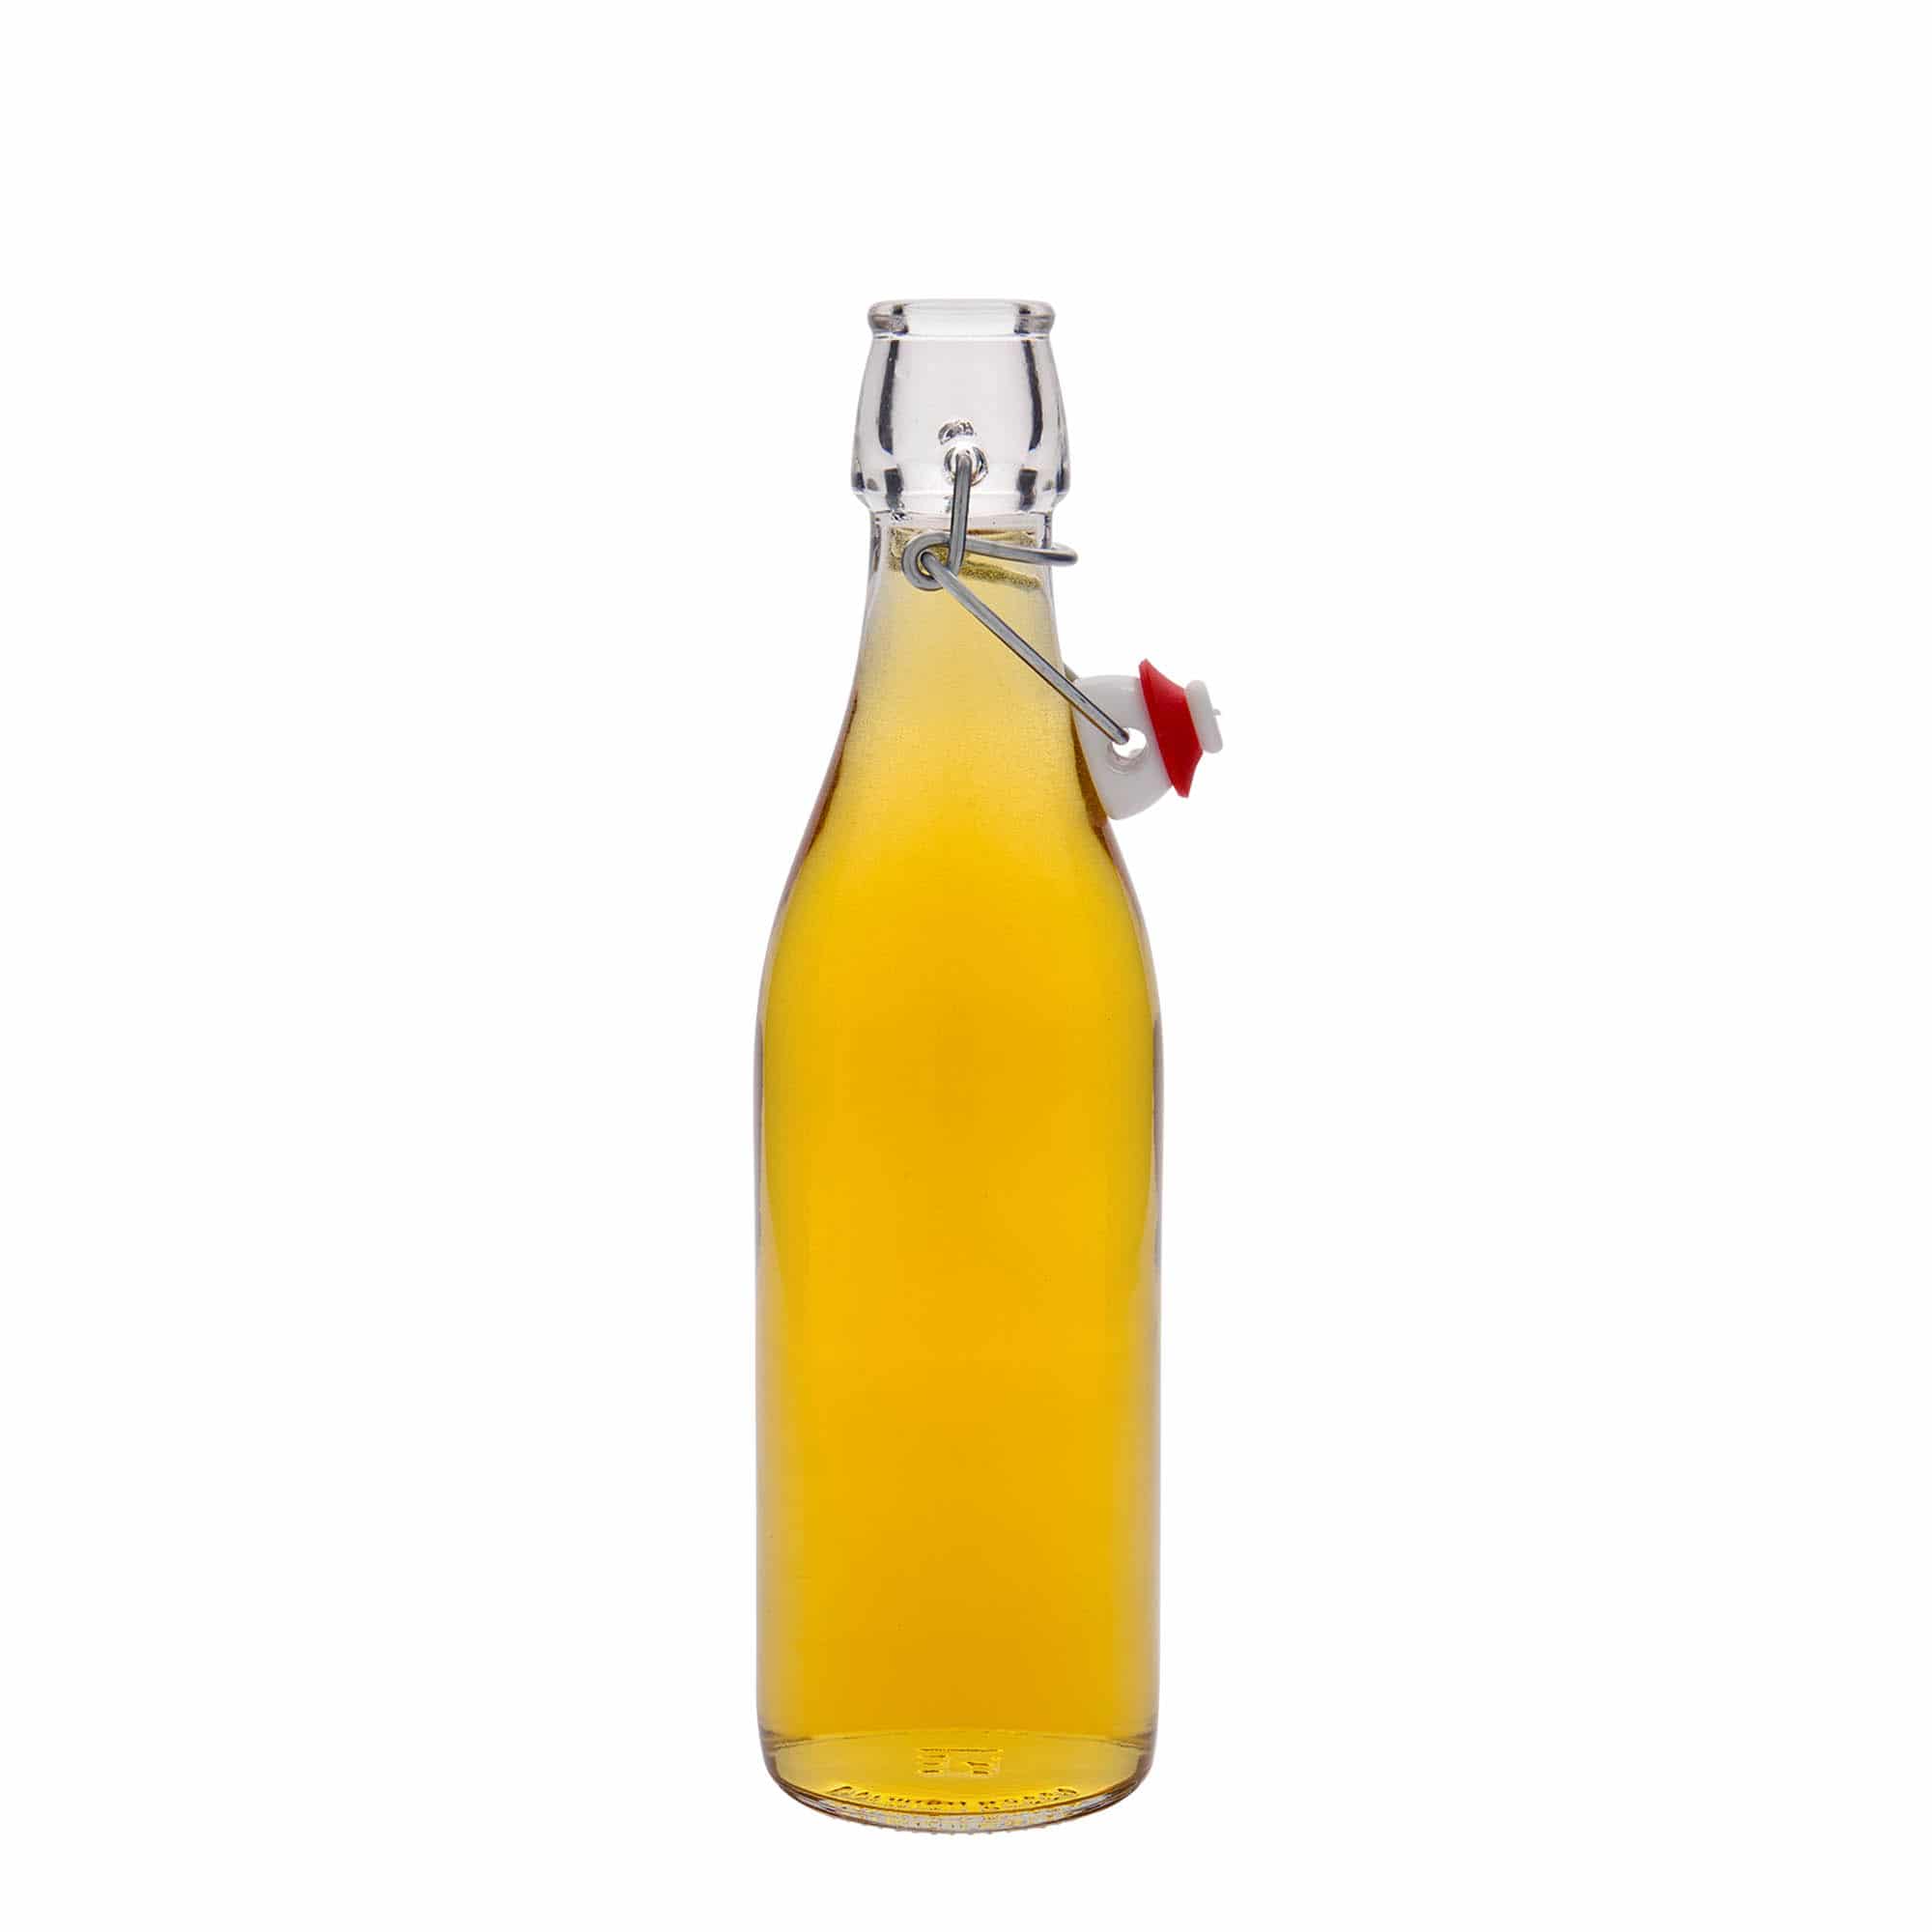 500 ml glass bottle 'Giara', closure: swing top